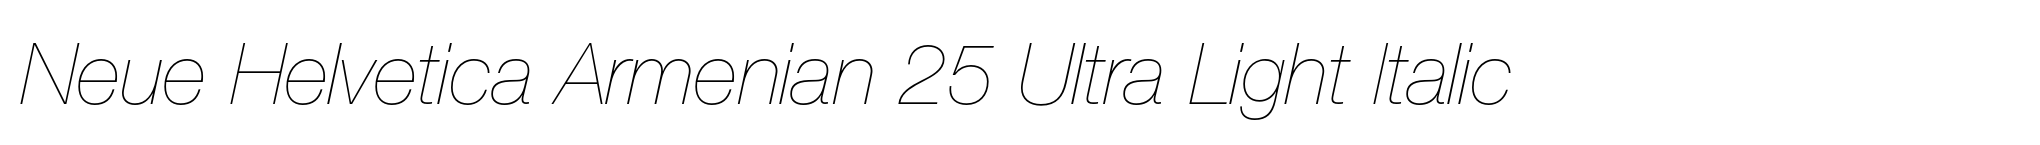 Neue Helvetica Armenian 25 Ultra Light Italic image